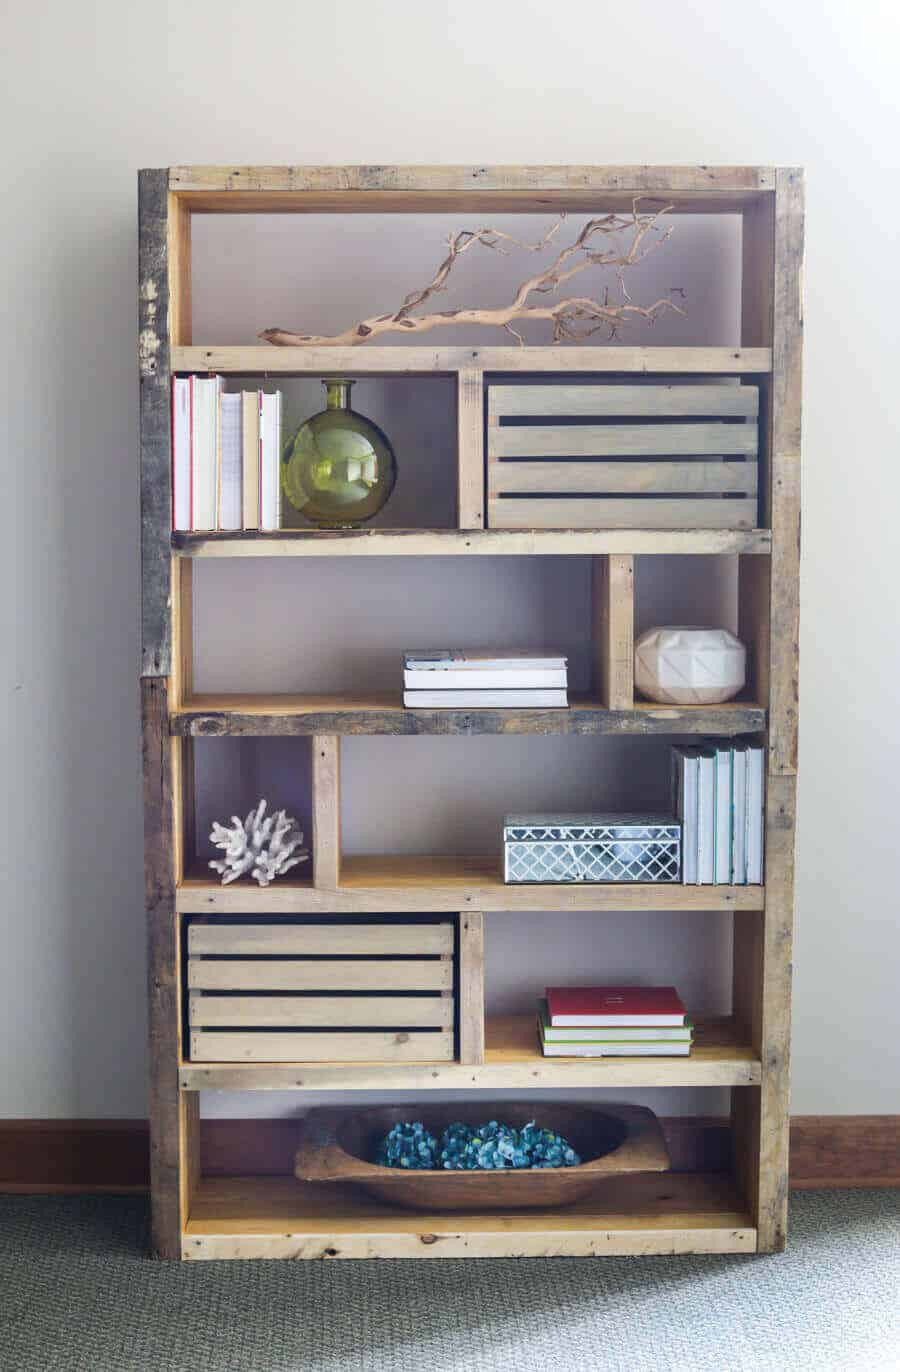 Wood Pallet Shelves DIY
 33 Diy Pallet Shelves You’ll Want to Build to Get more